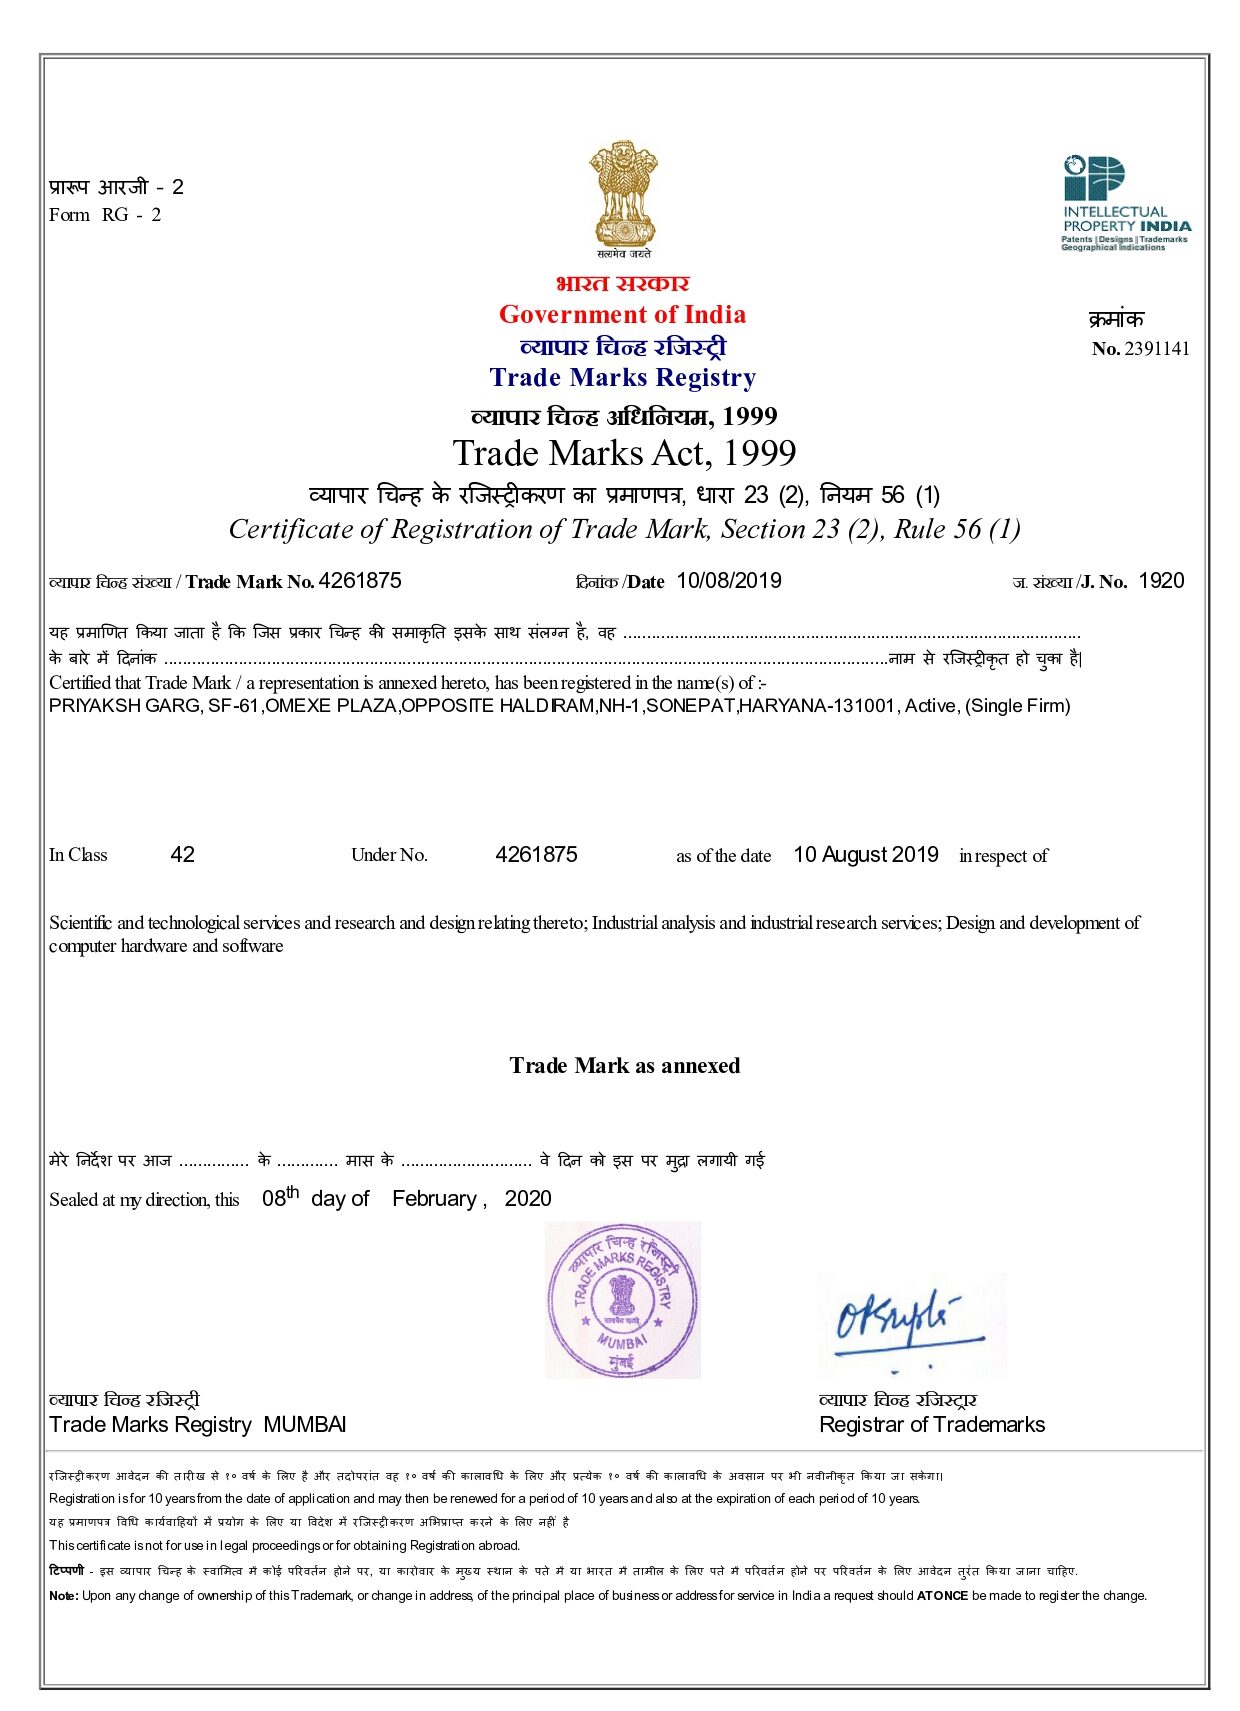 ShubhiTech Trade Mark Registration Certificate